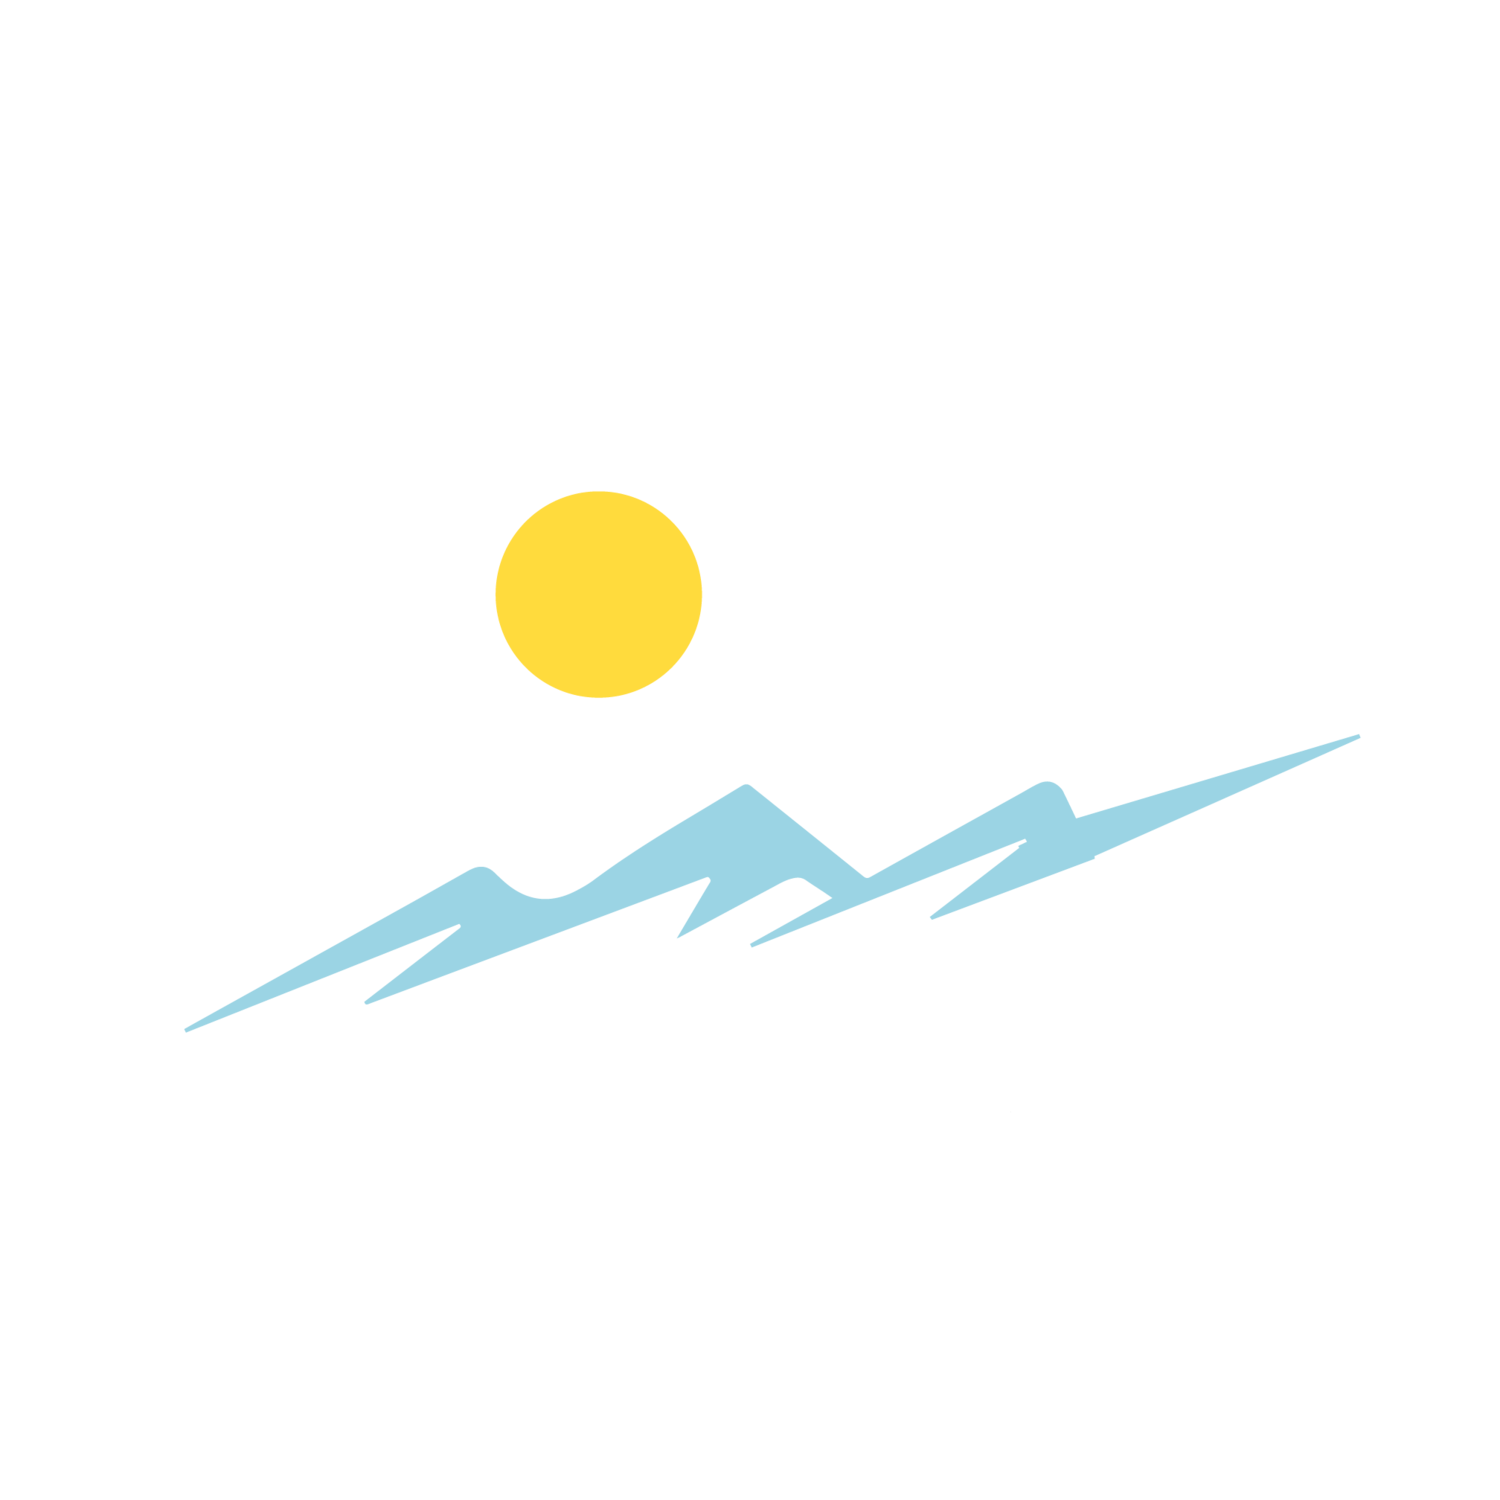 NextBetter™